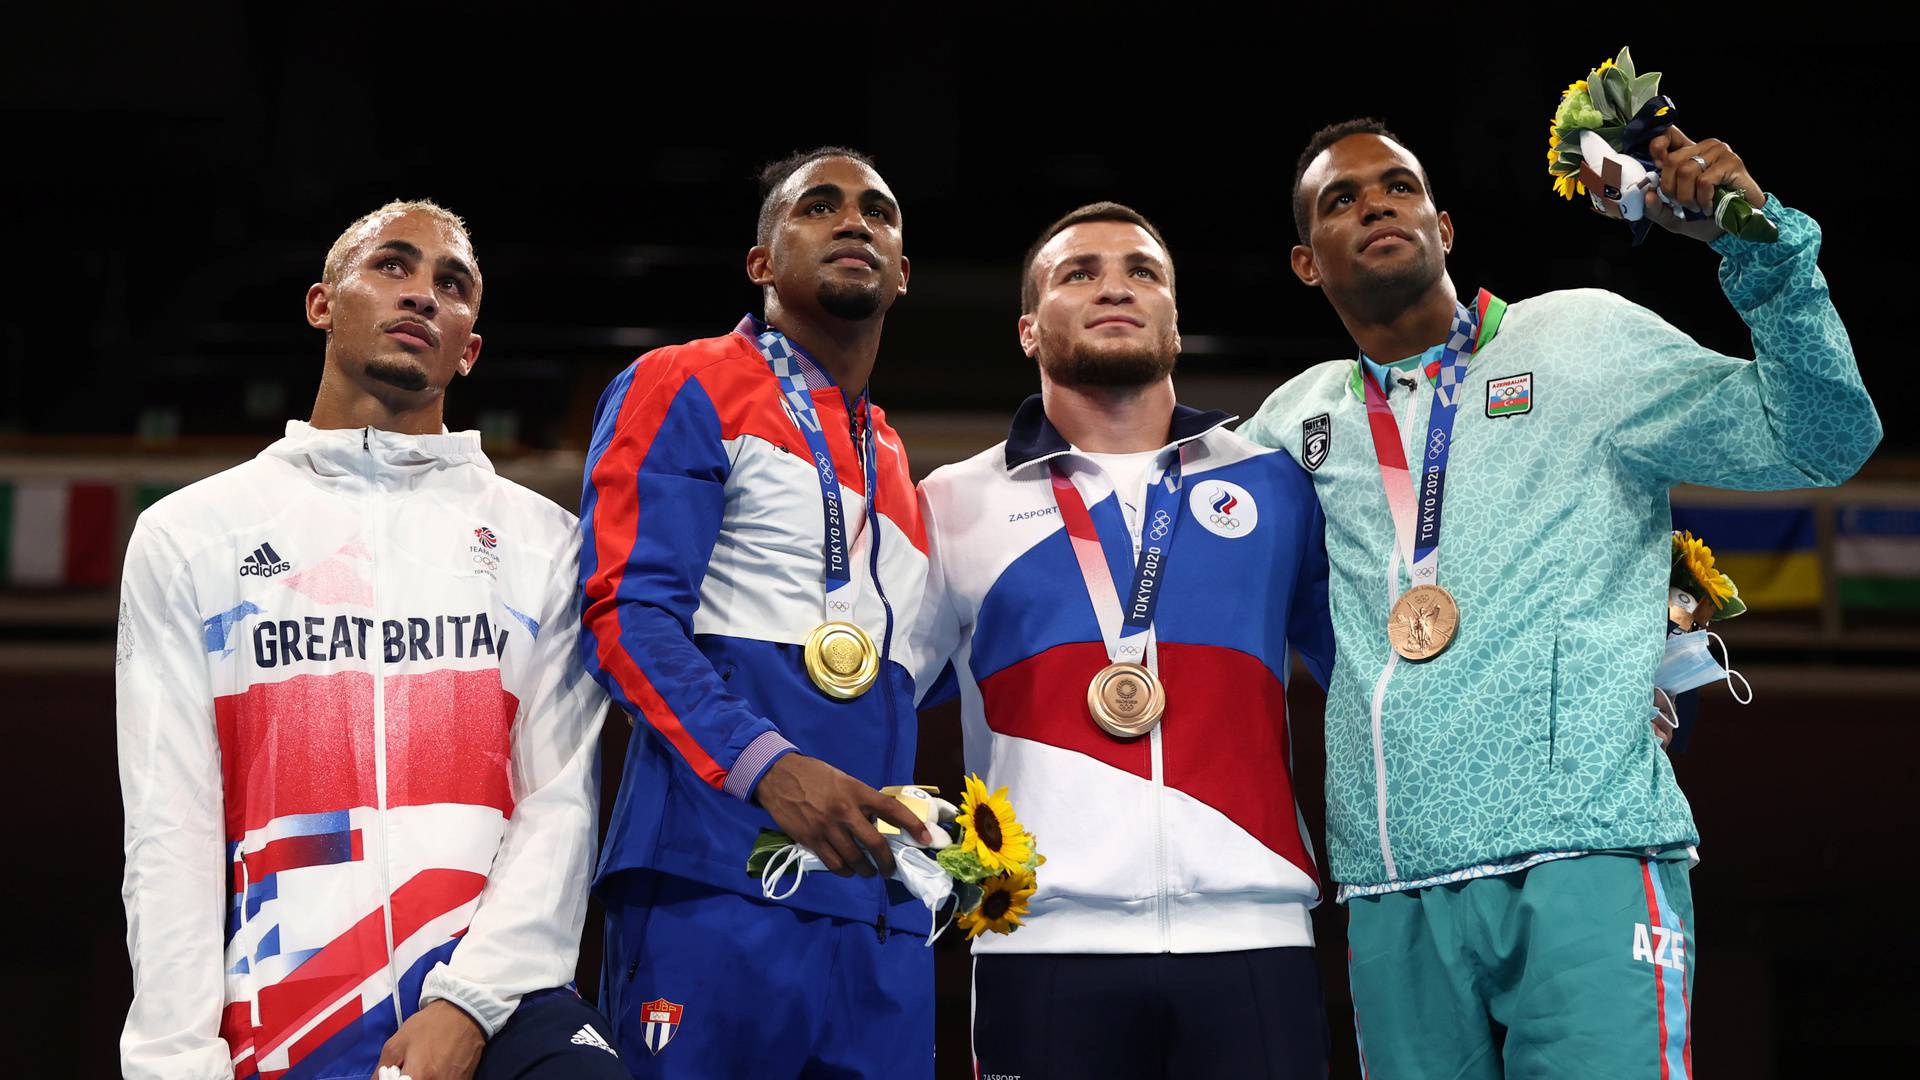 Boxing - Men's Light Heavyweight - Medal Ceremony